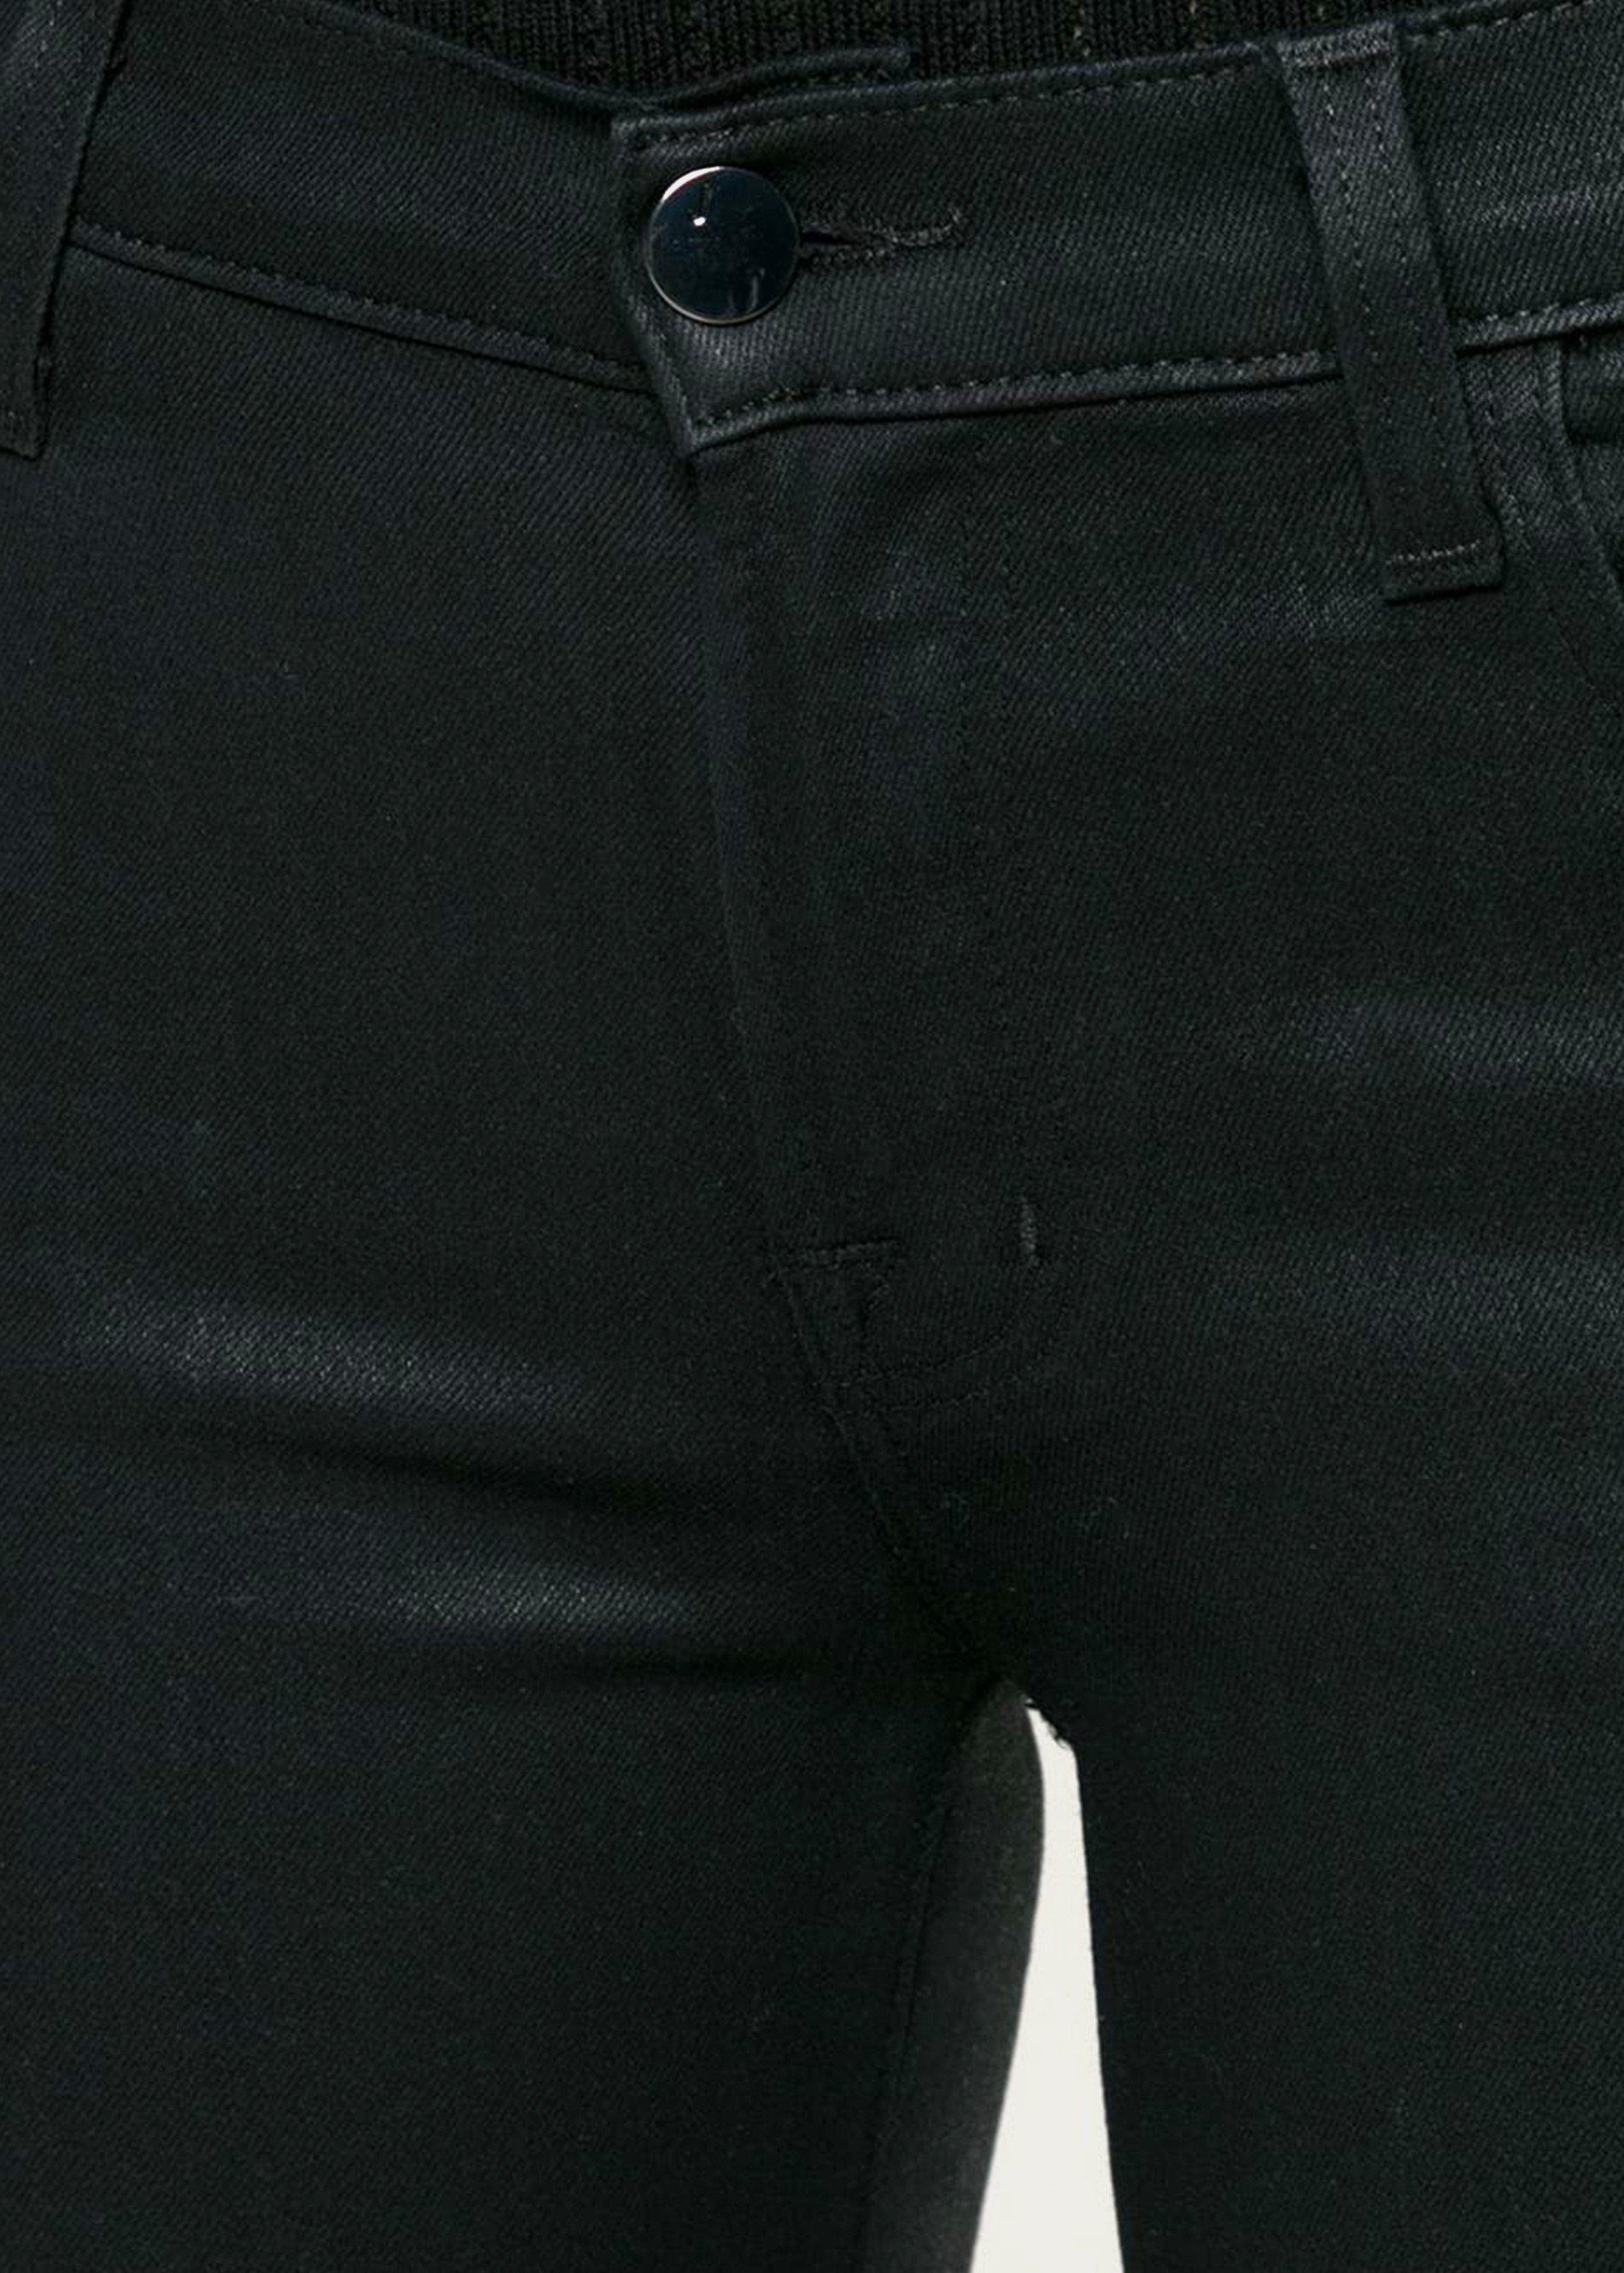 Jeans Selena crop bootcut neri